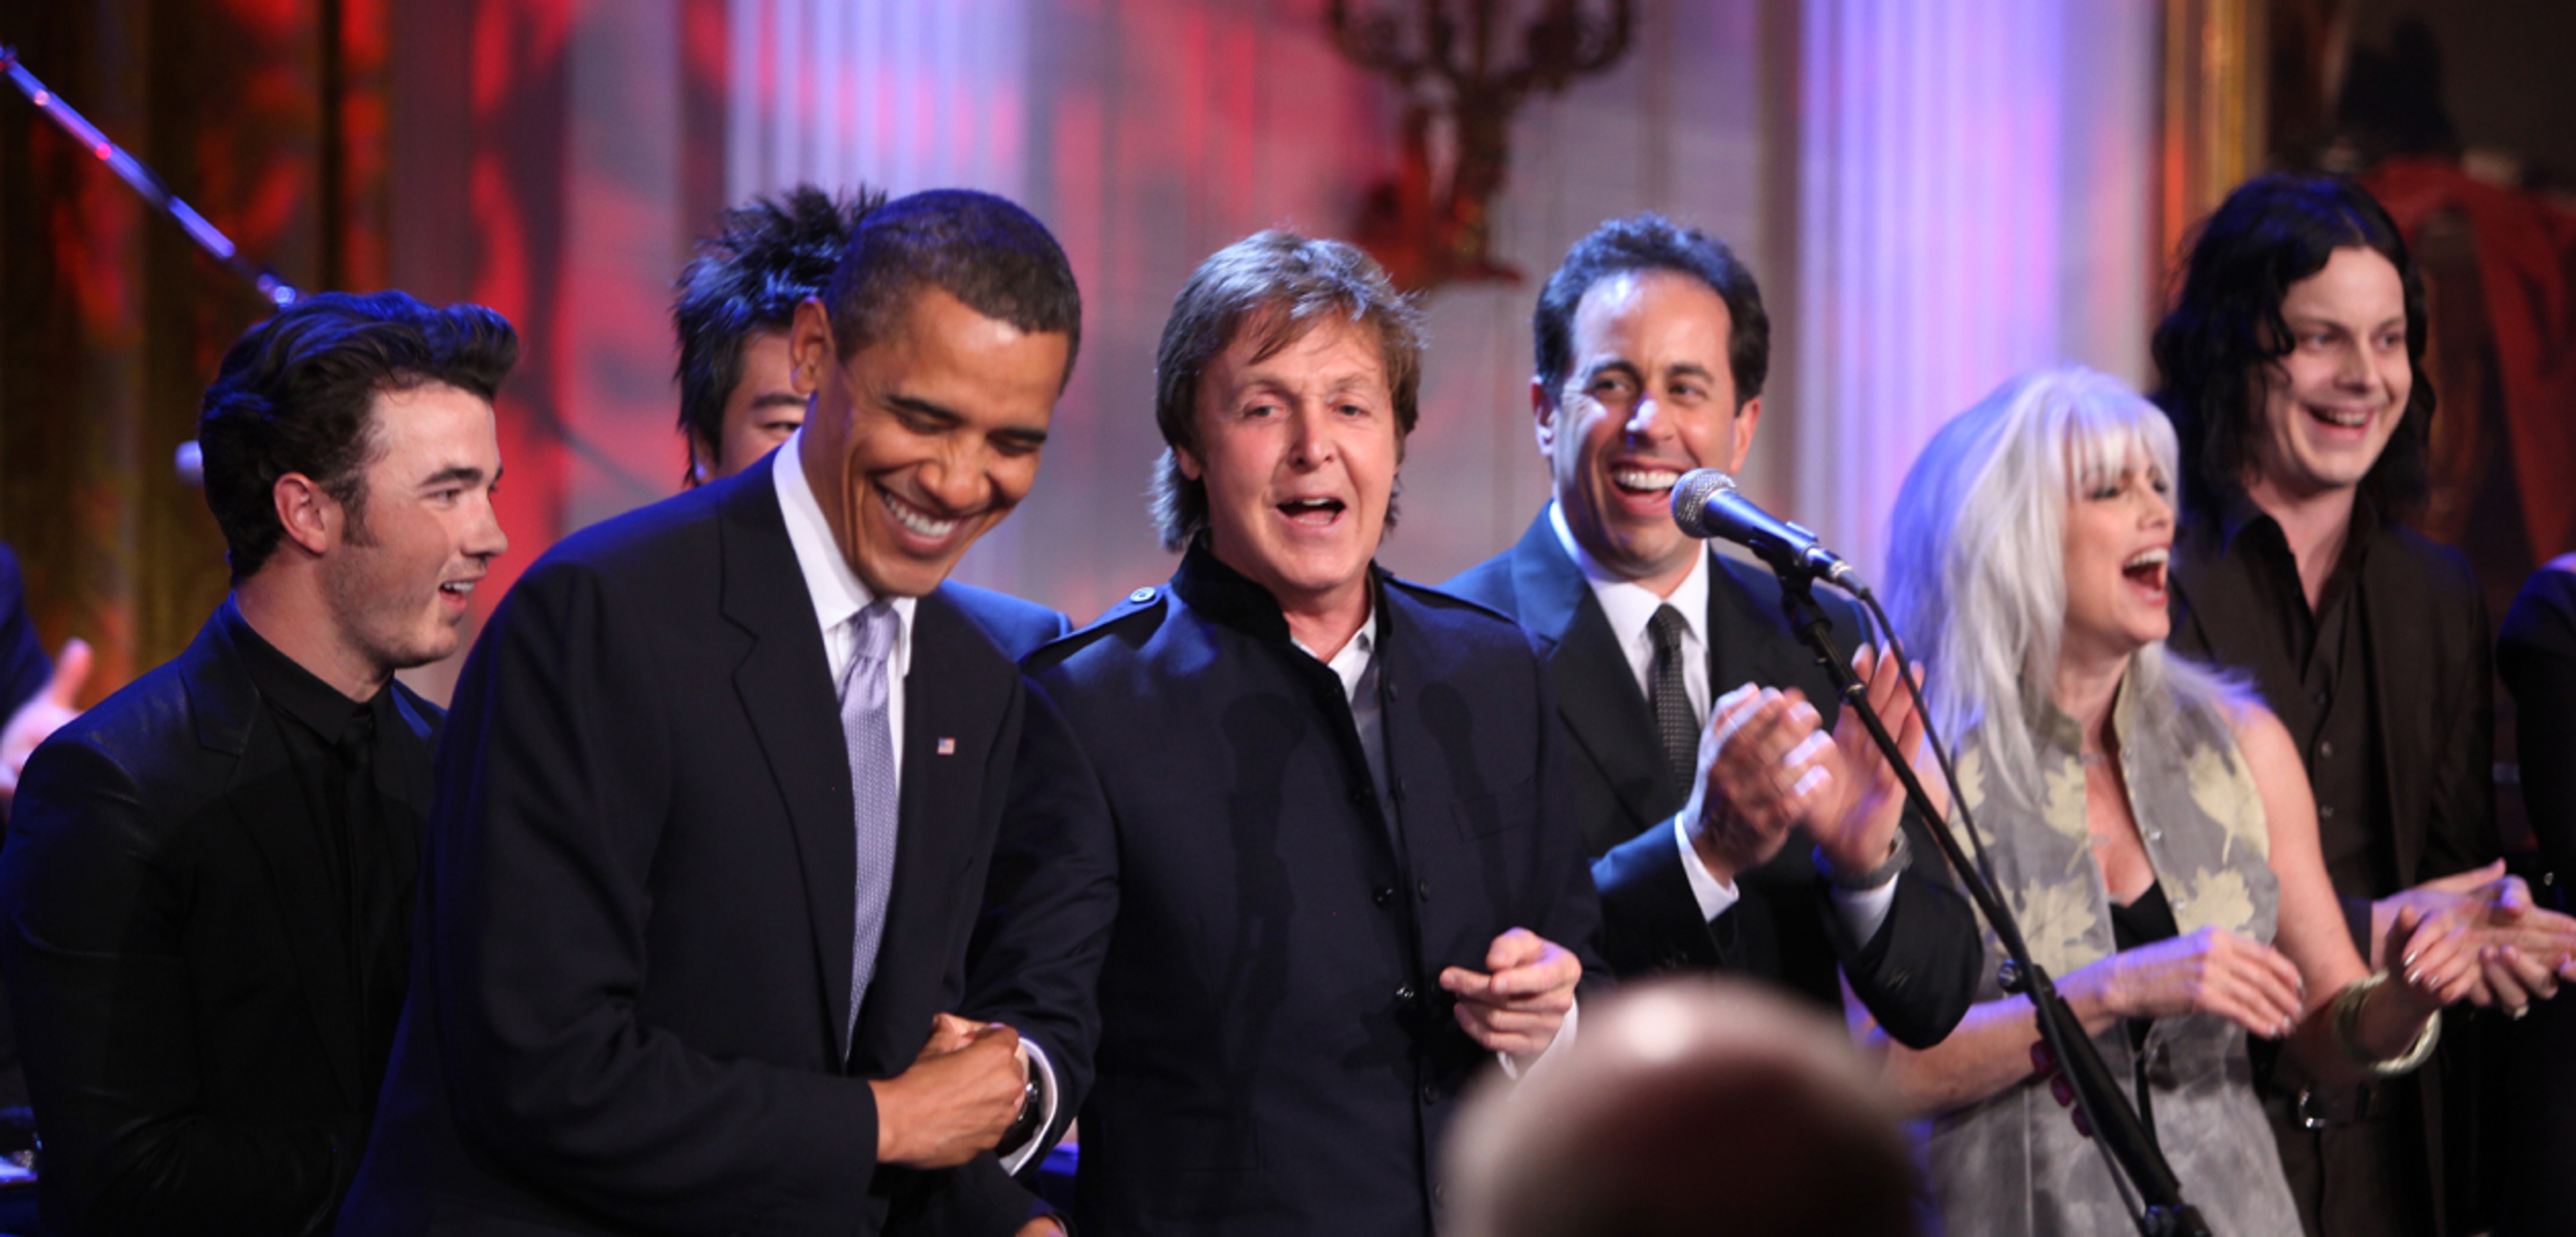 Paul and Barack Obama at the Gershwin Award Concert